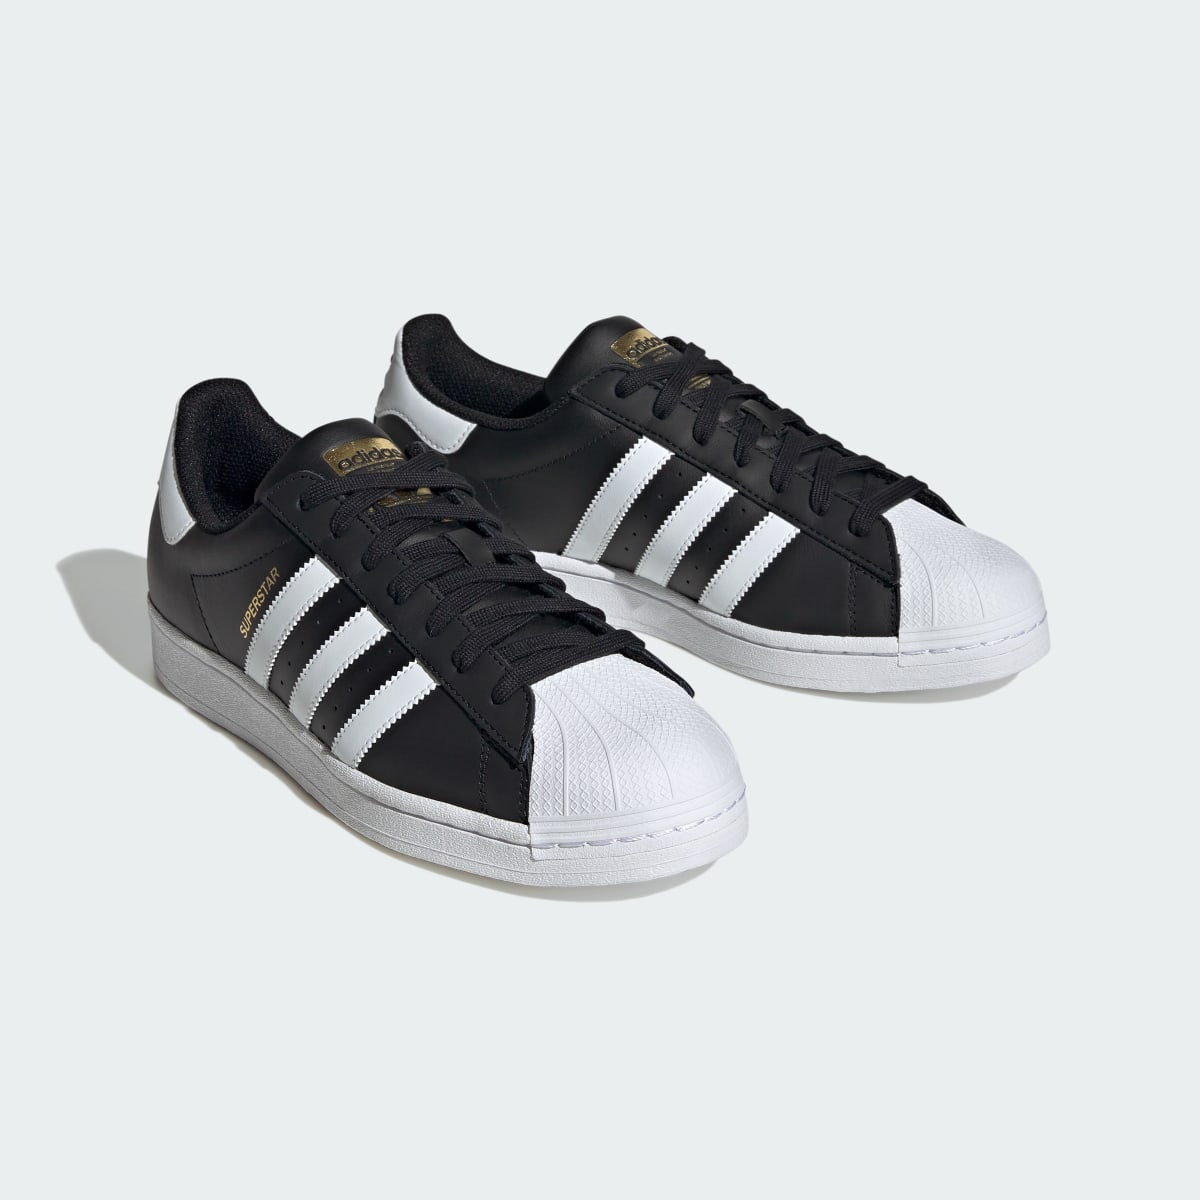 Adidas Superstar Shoes. 5